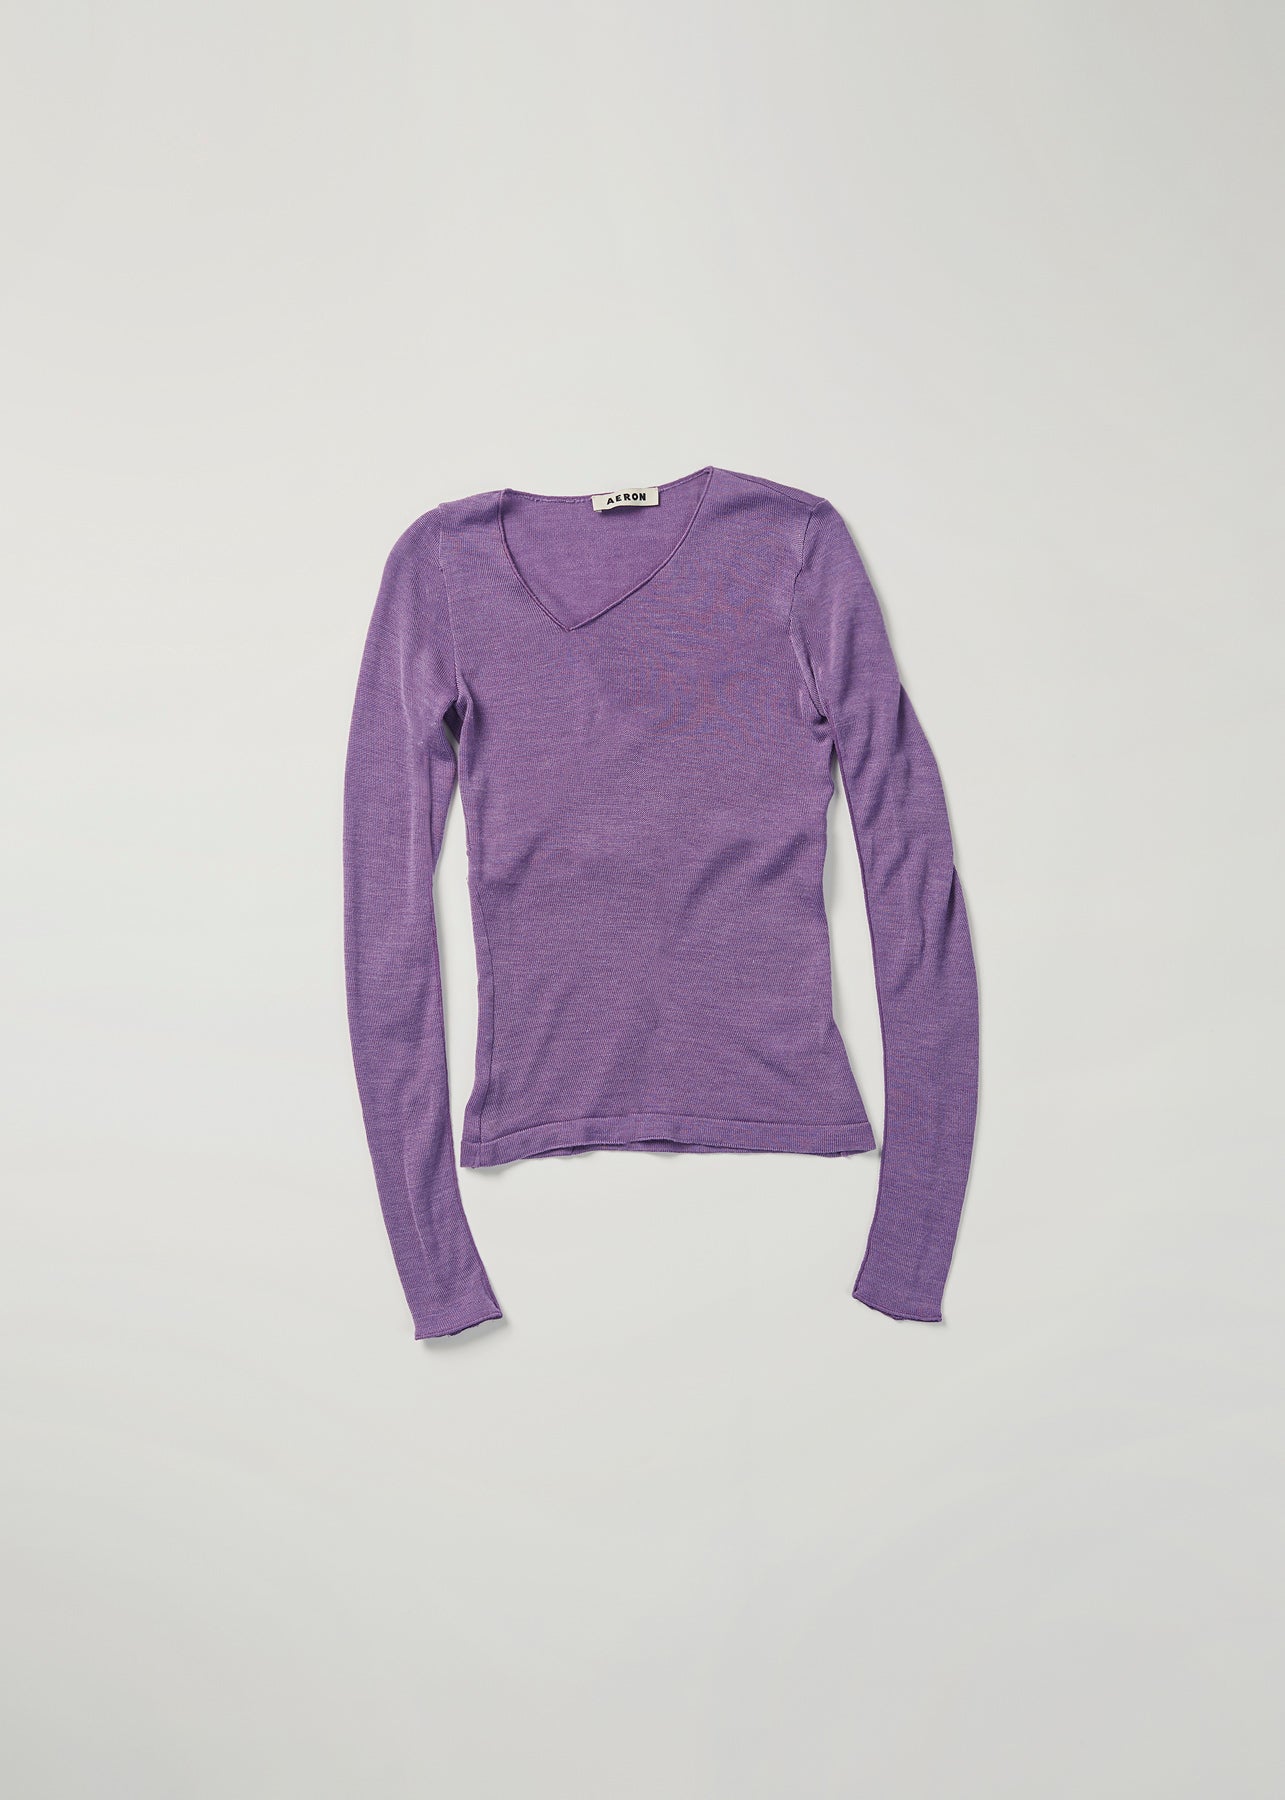 AERON FRAME Asymmetric V-neck wool sweater – lavender